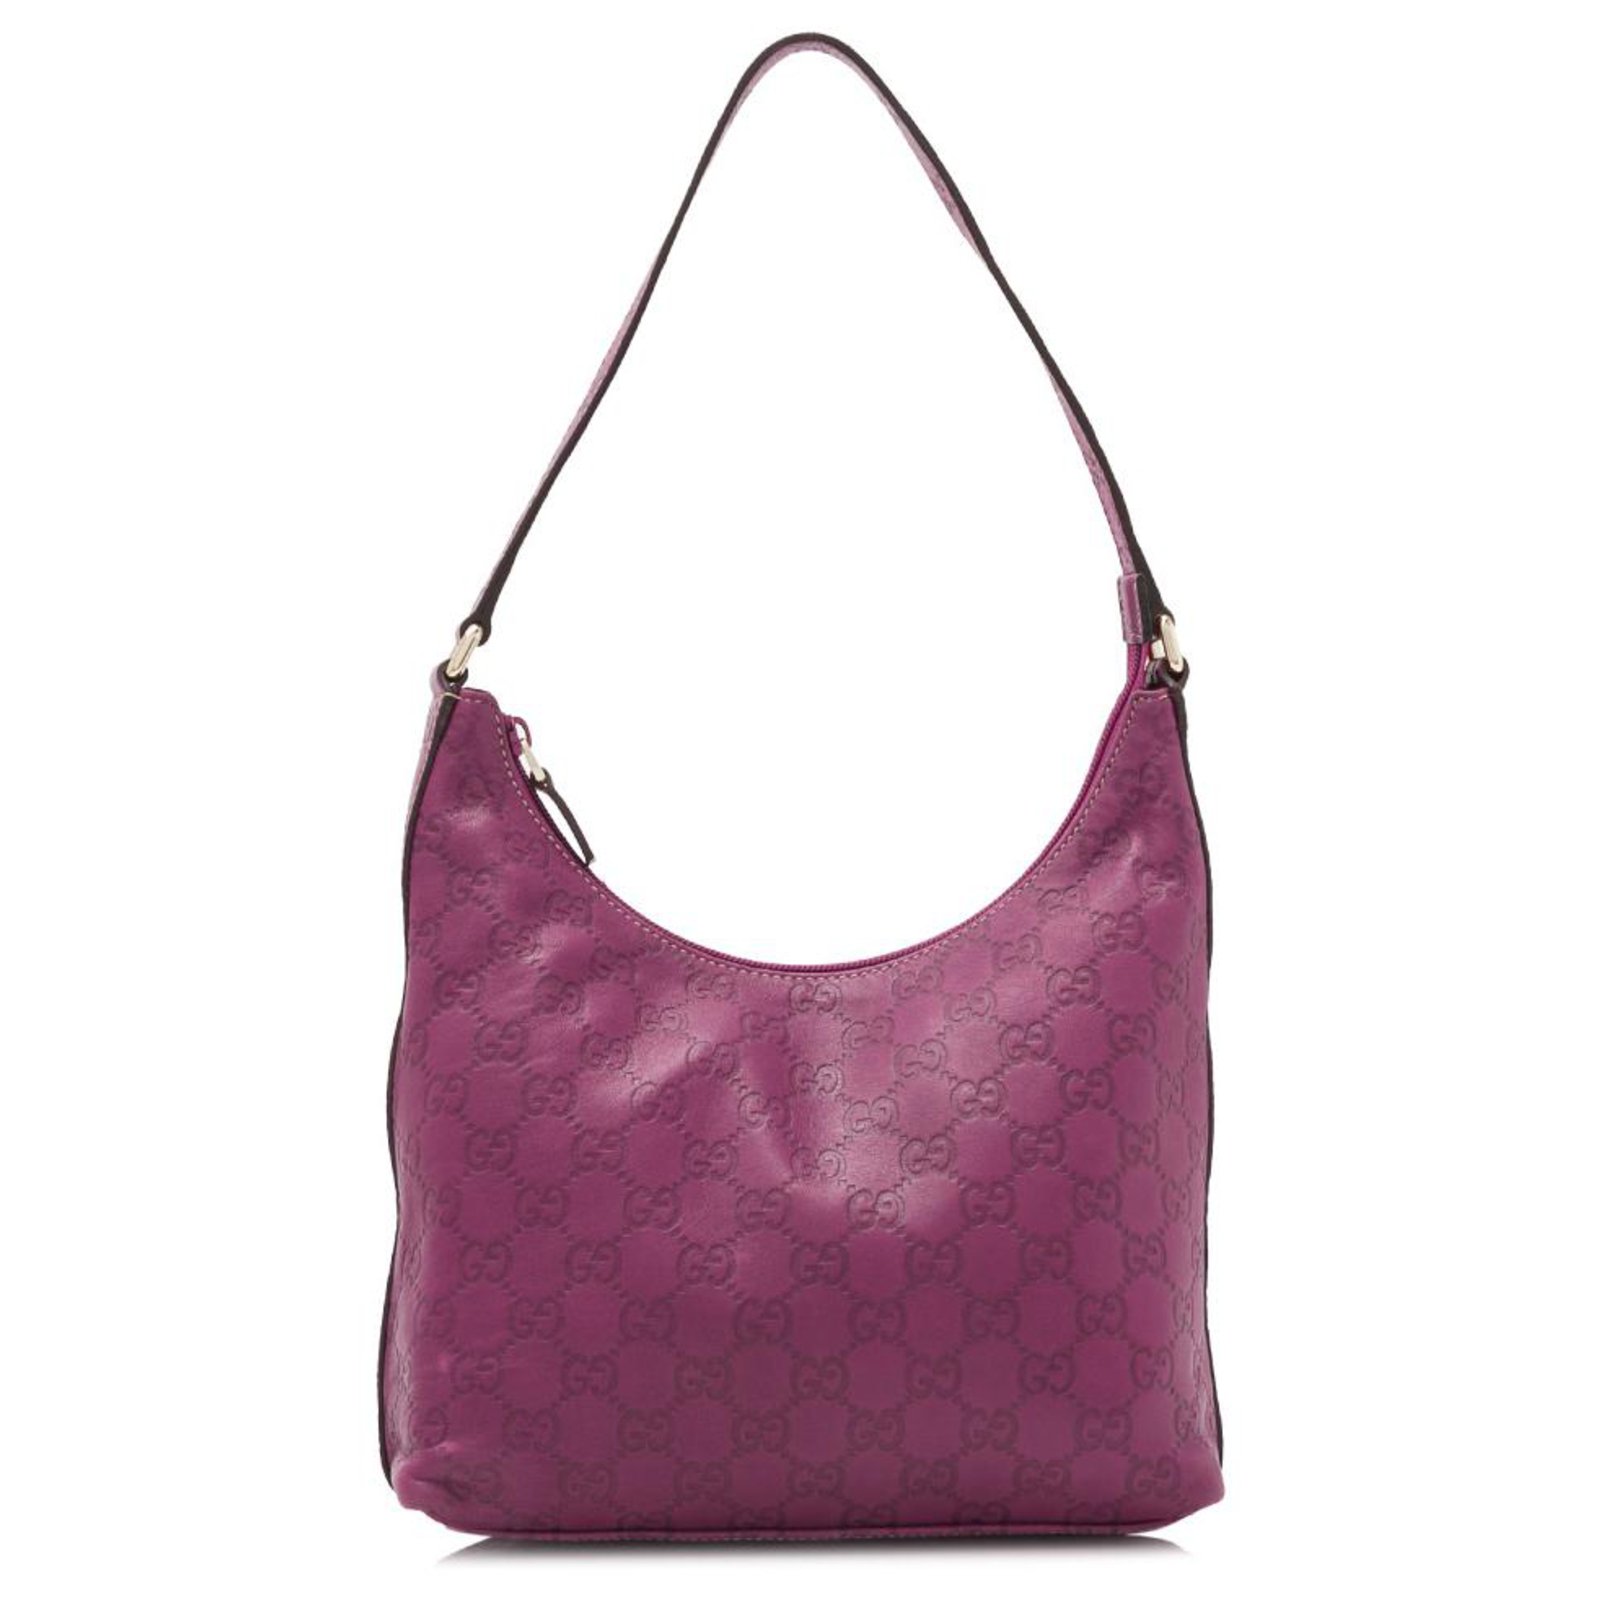 gucci leather hobo handbags